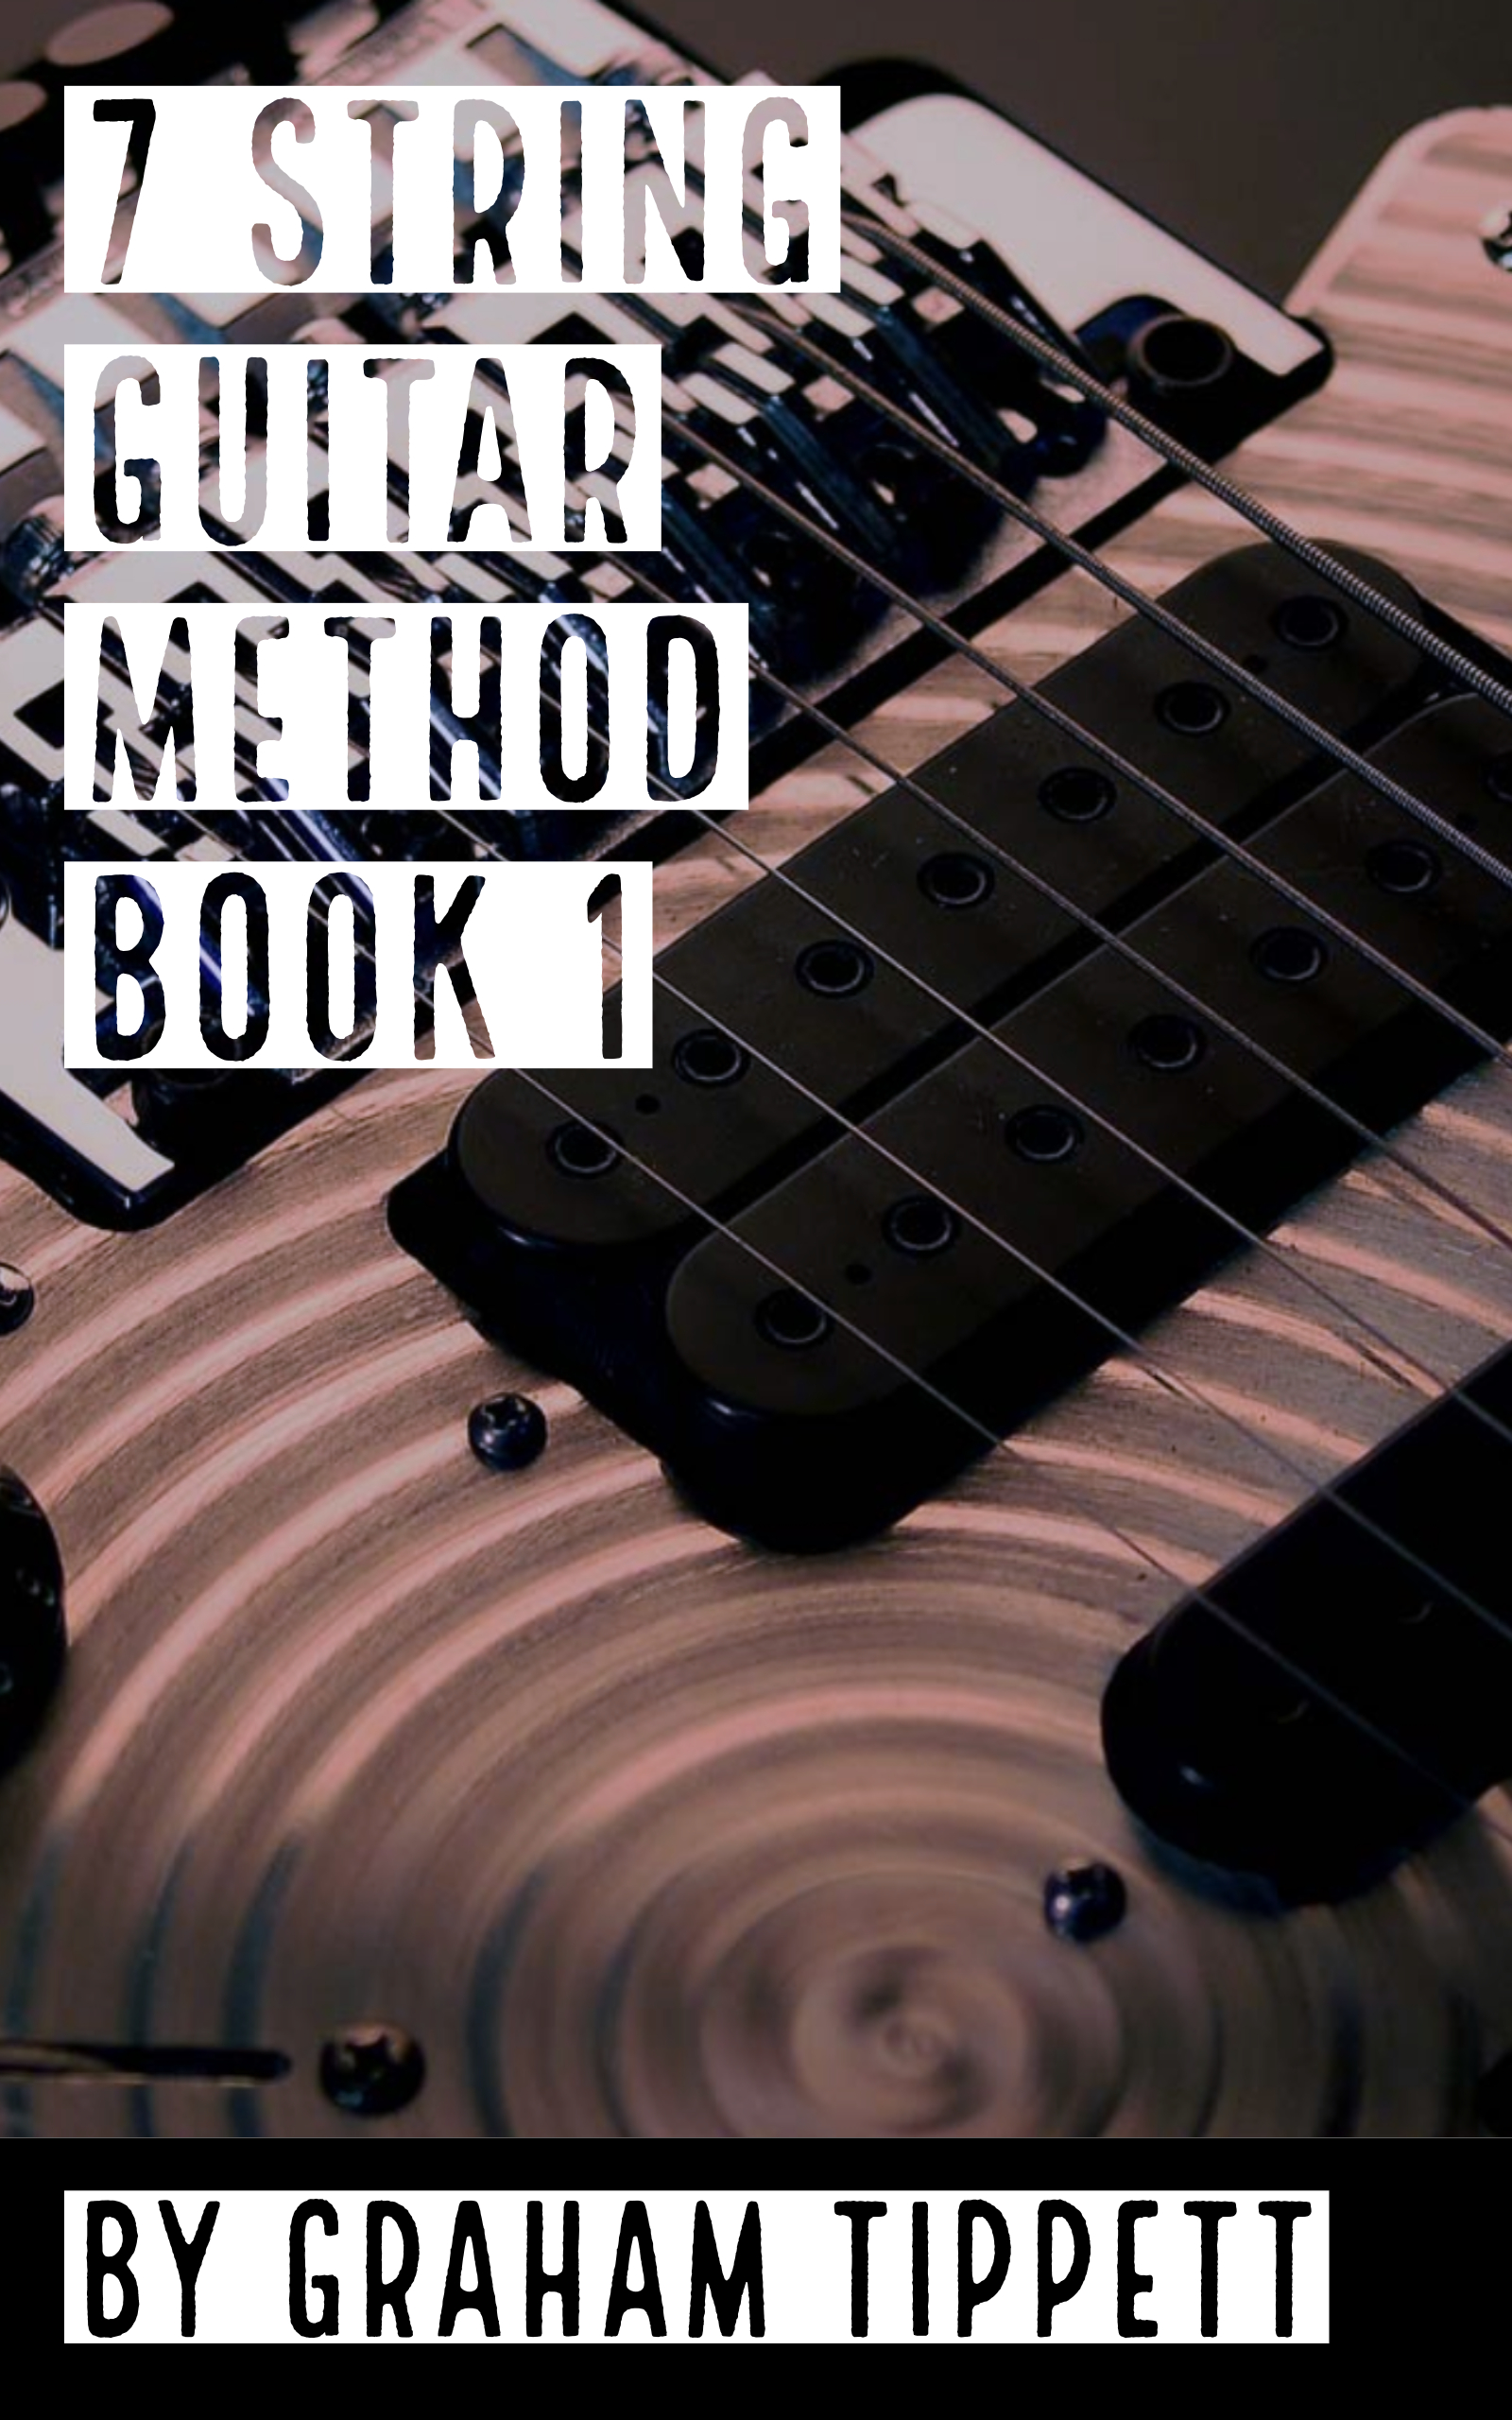 7 string guitar method book 1